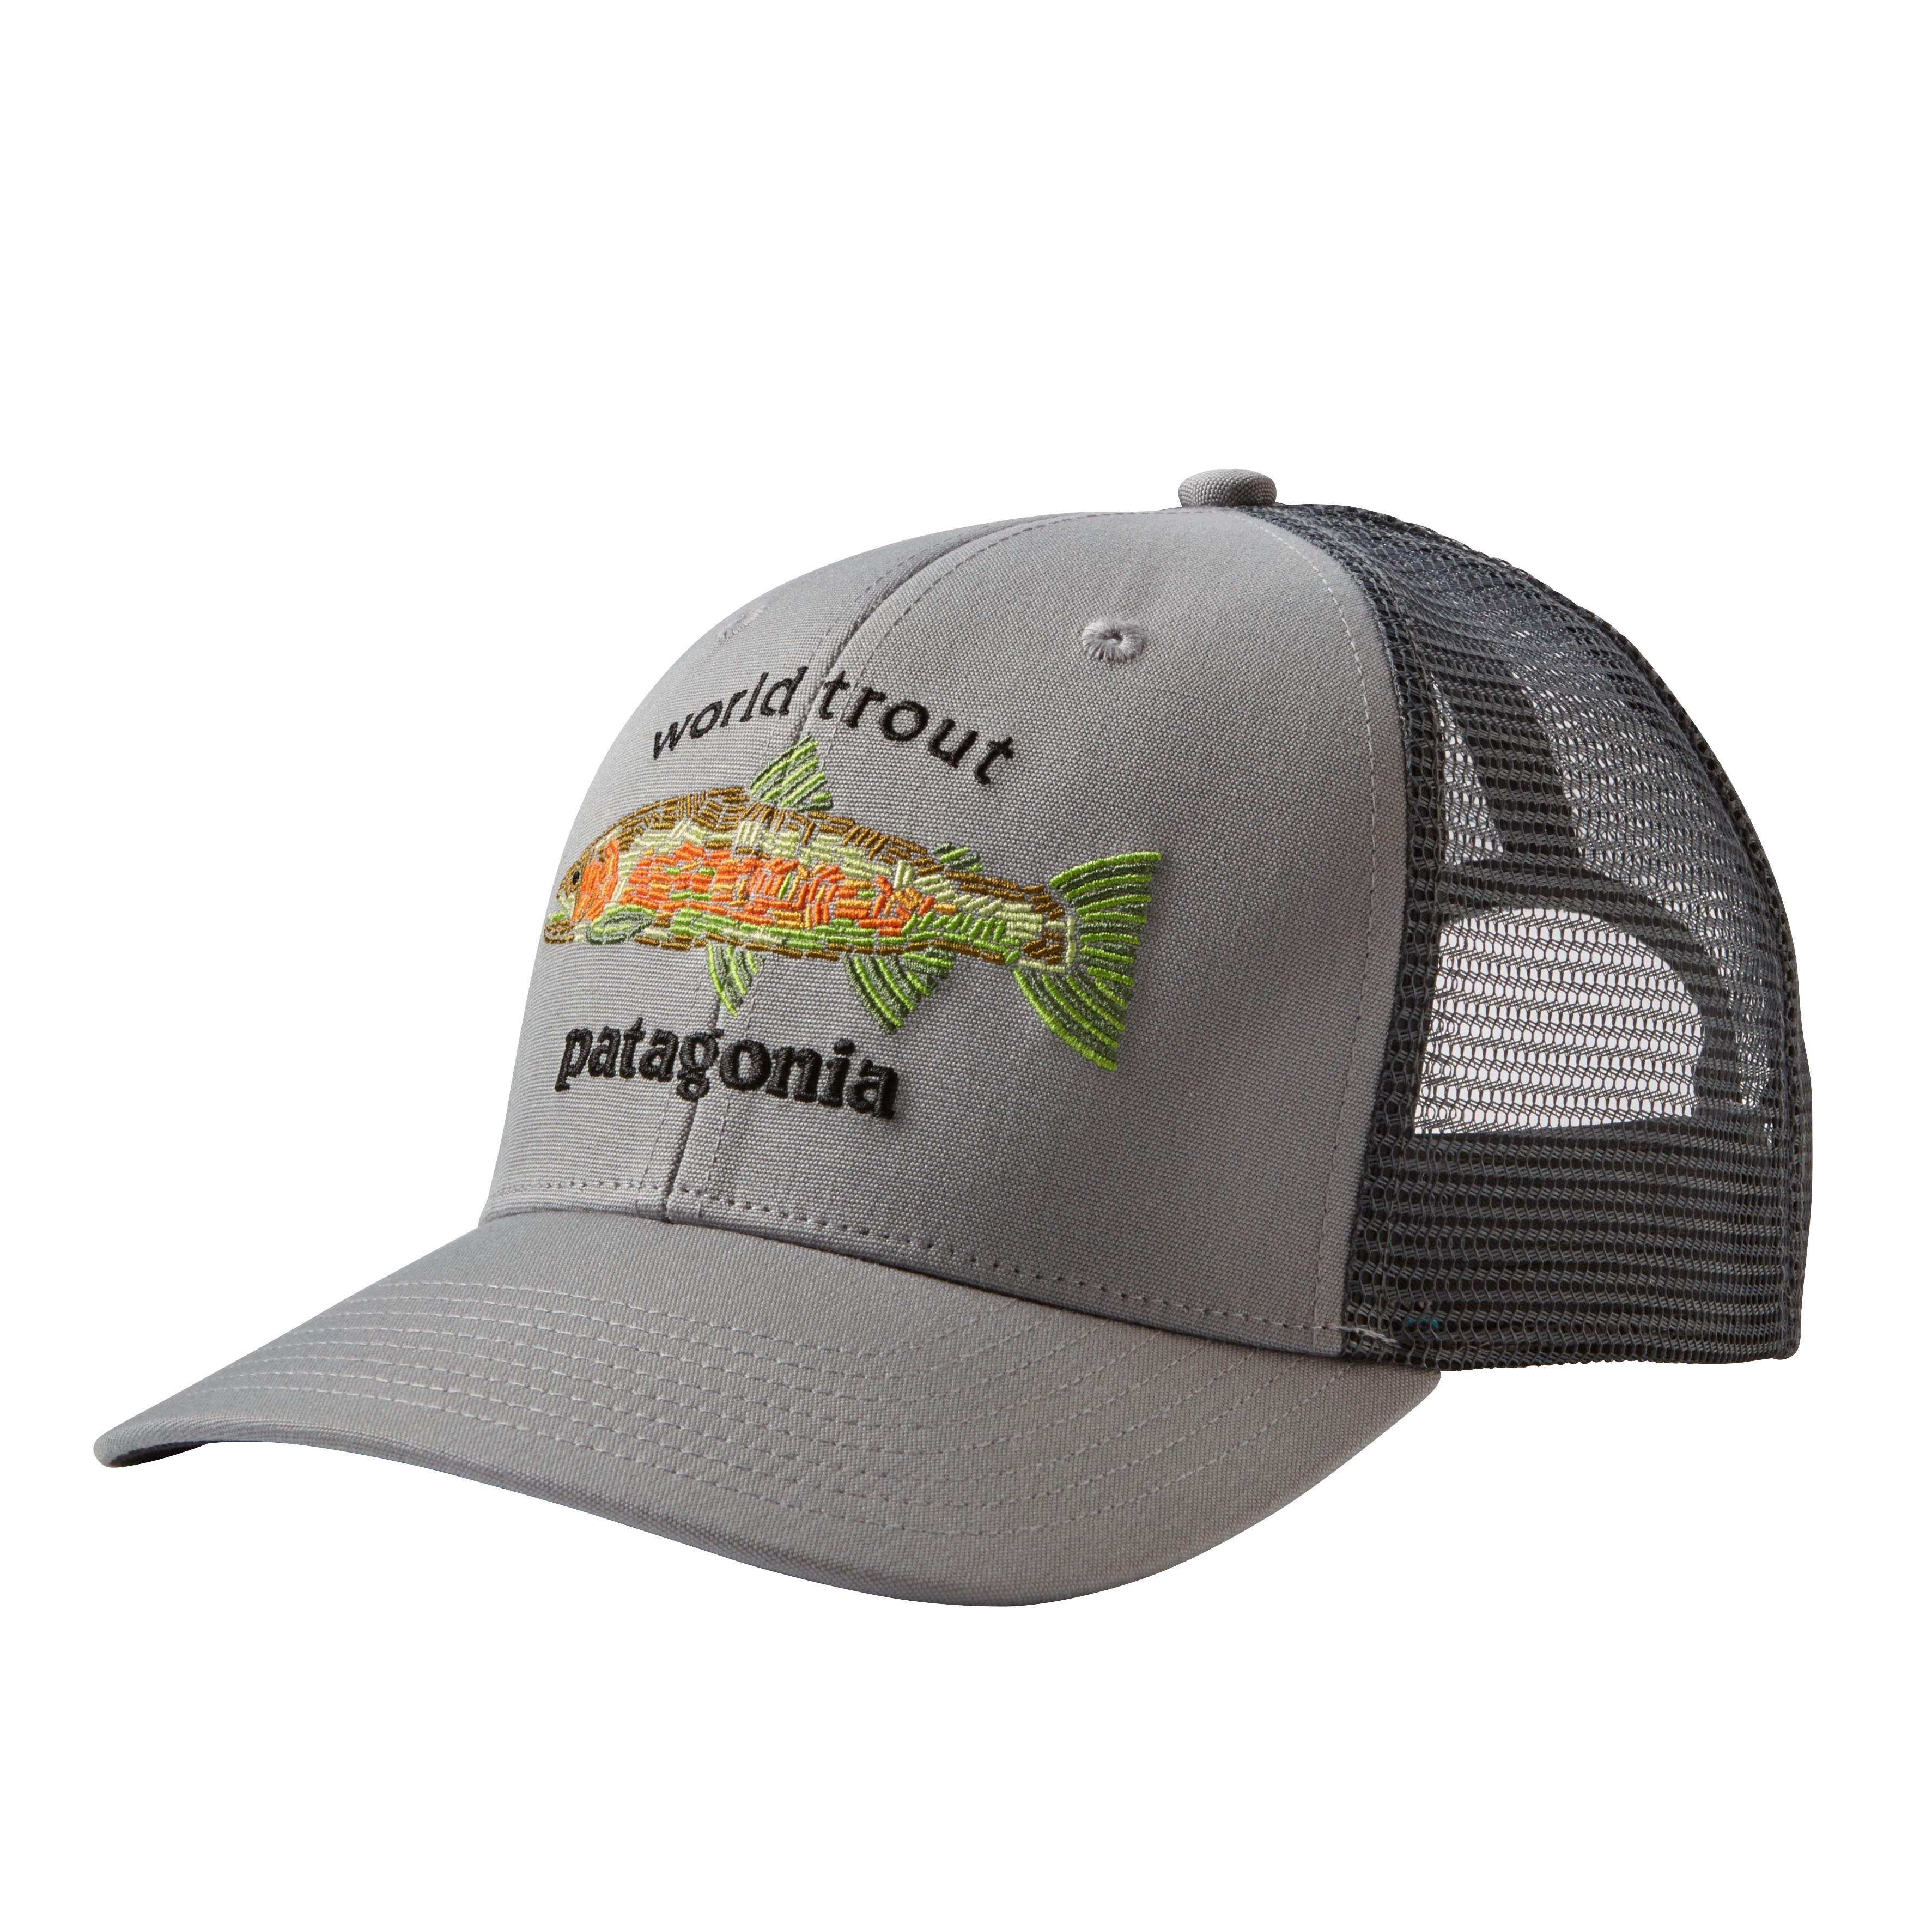 Patagonia World Trout Fishstitch Trucker Hat Grey